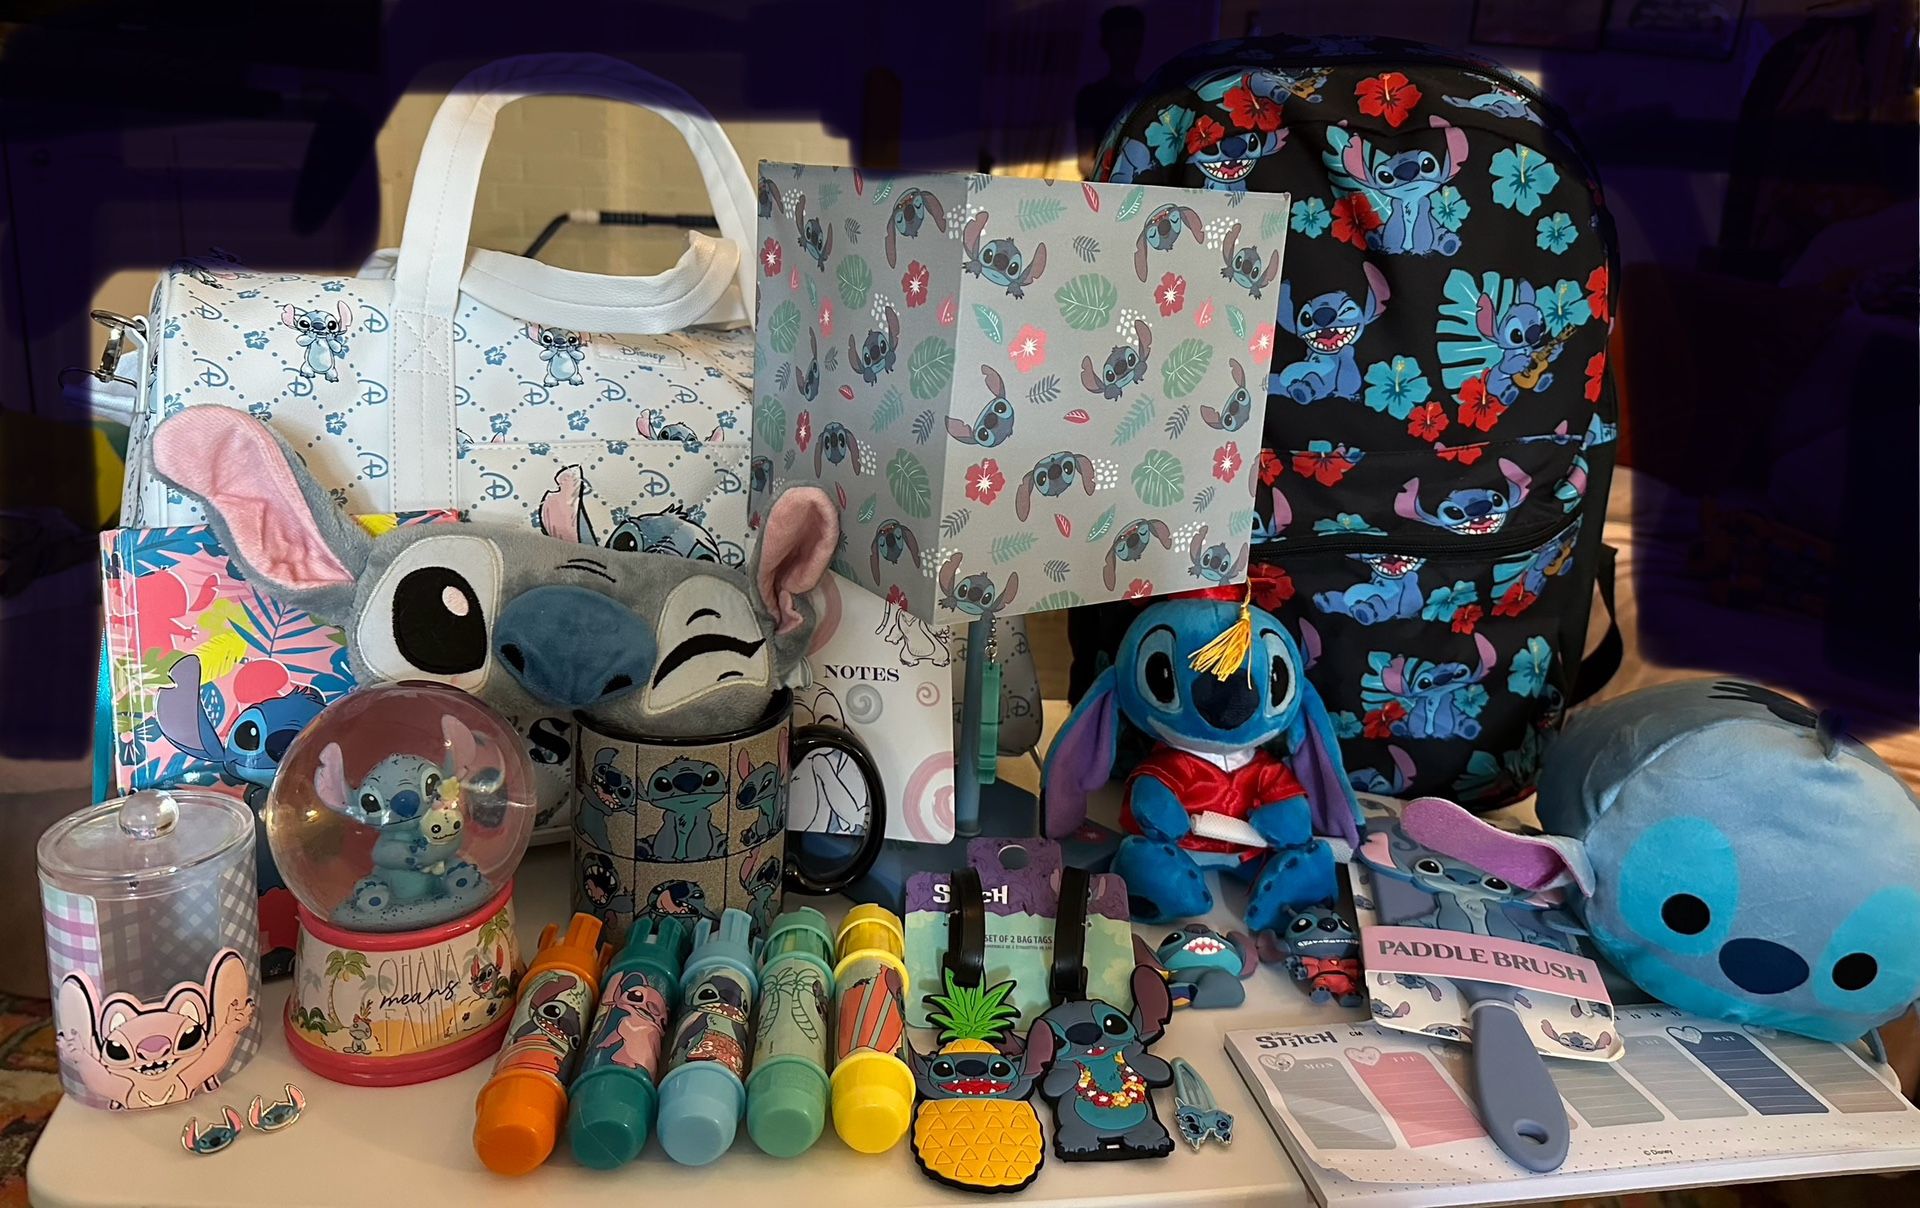 Lilo & Stitch collection - Disney Vacation Ready!